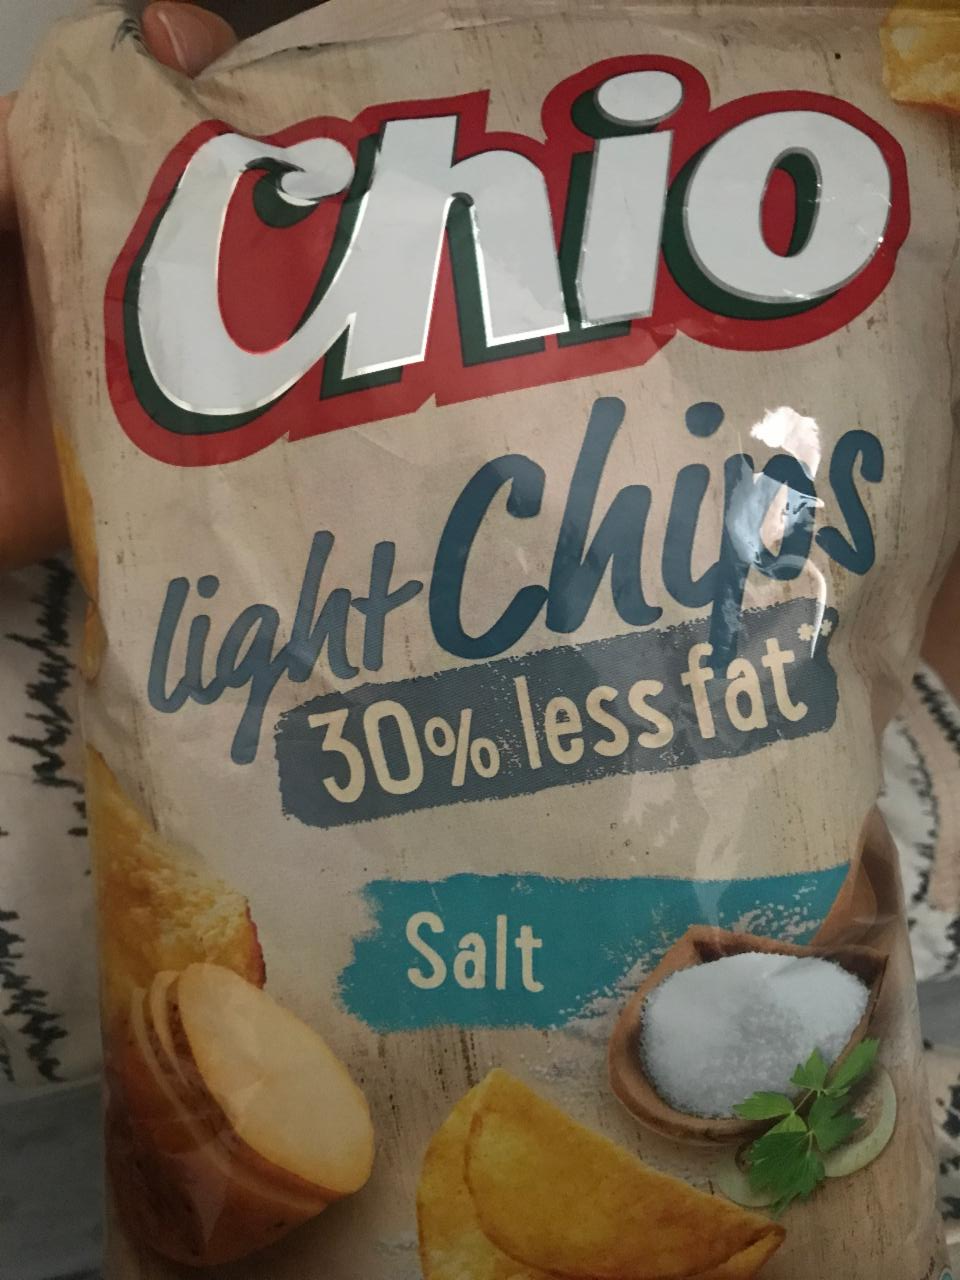 Fotografie - Chio Light Chips 30% Less Fat Salt